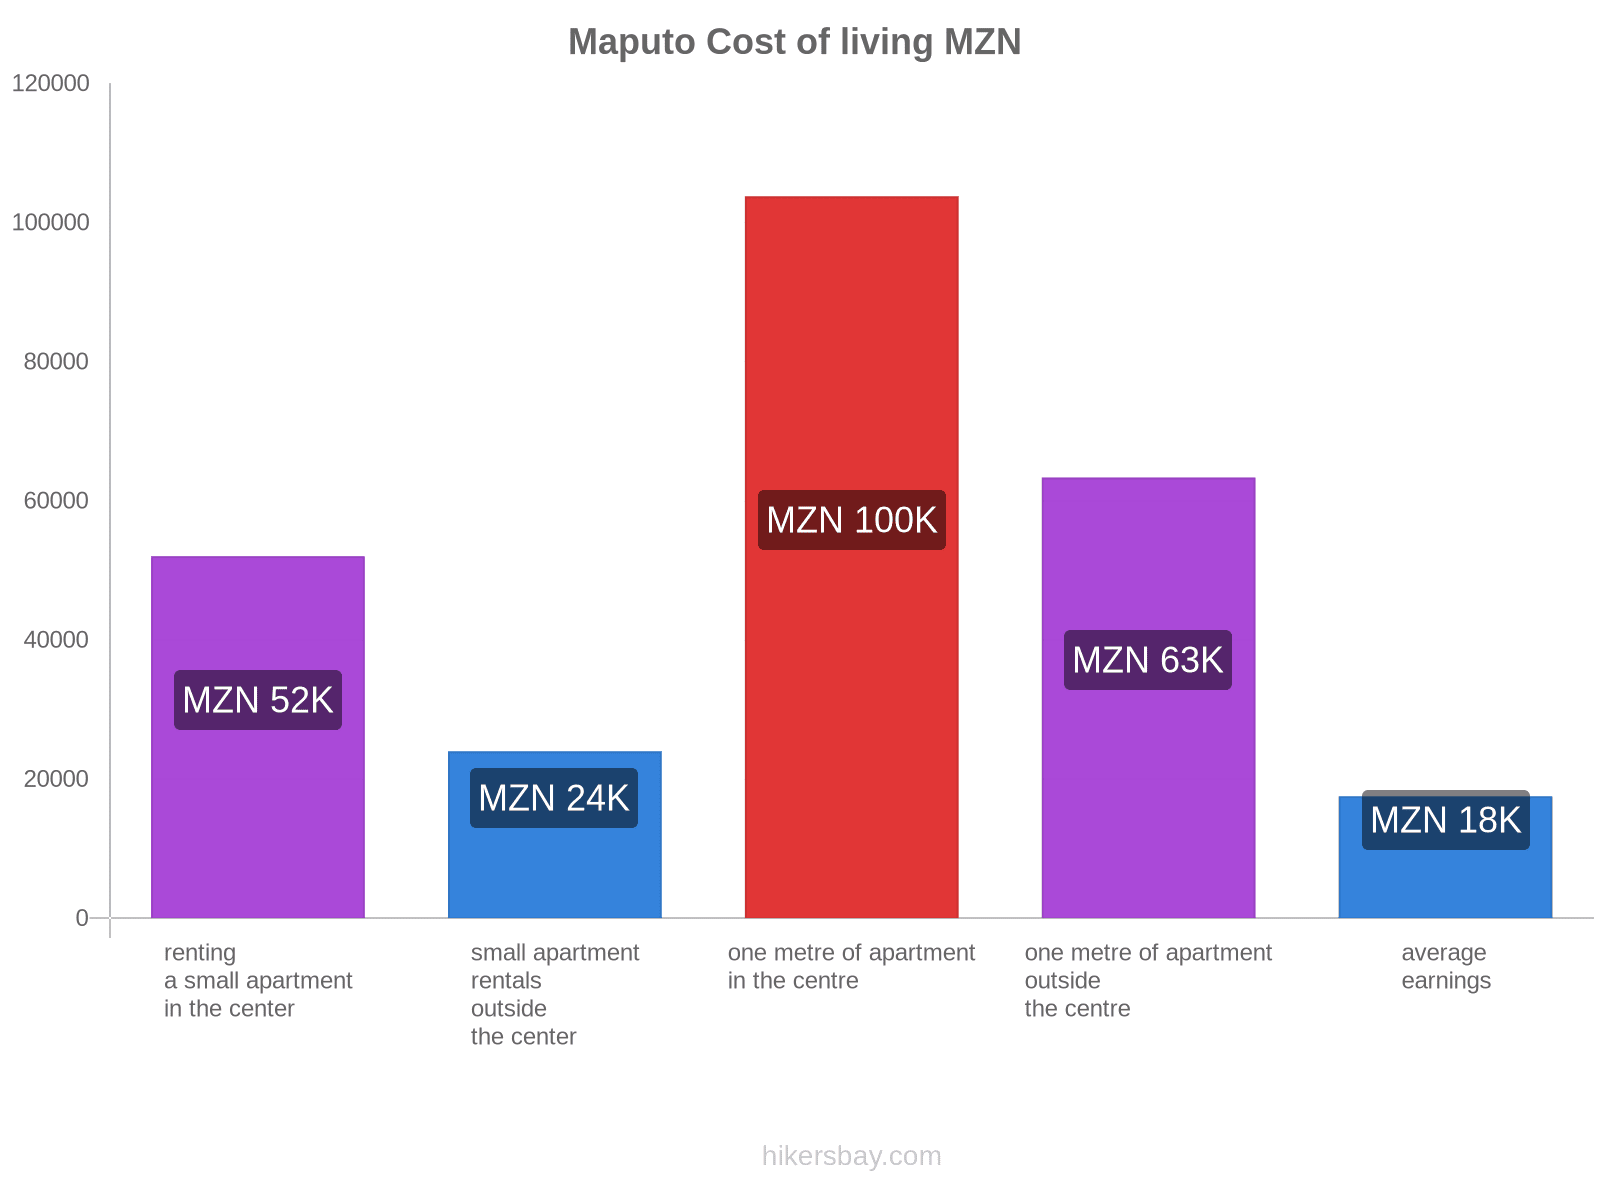 Maputo cost of living hikersbay.com